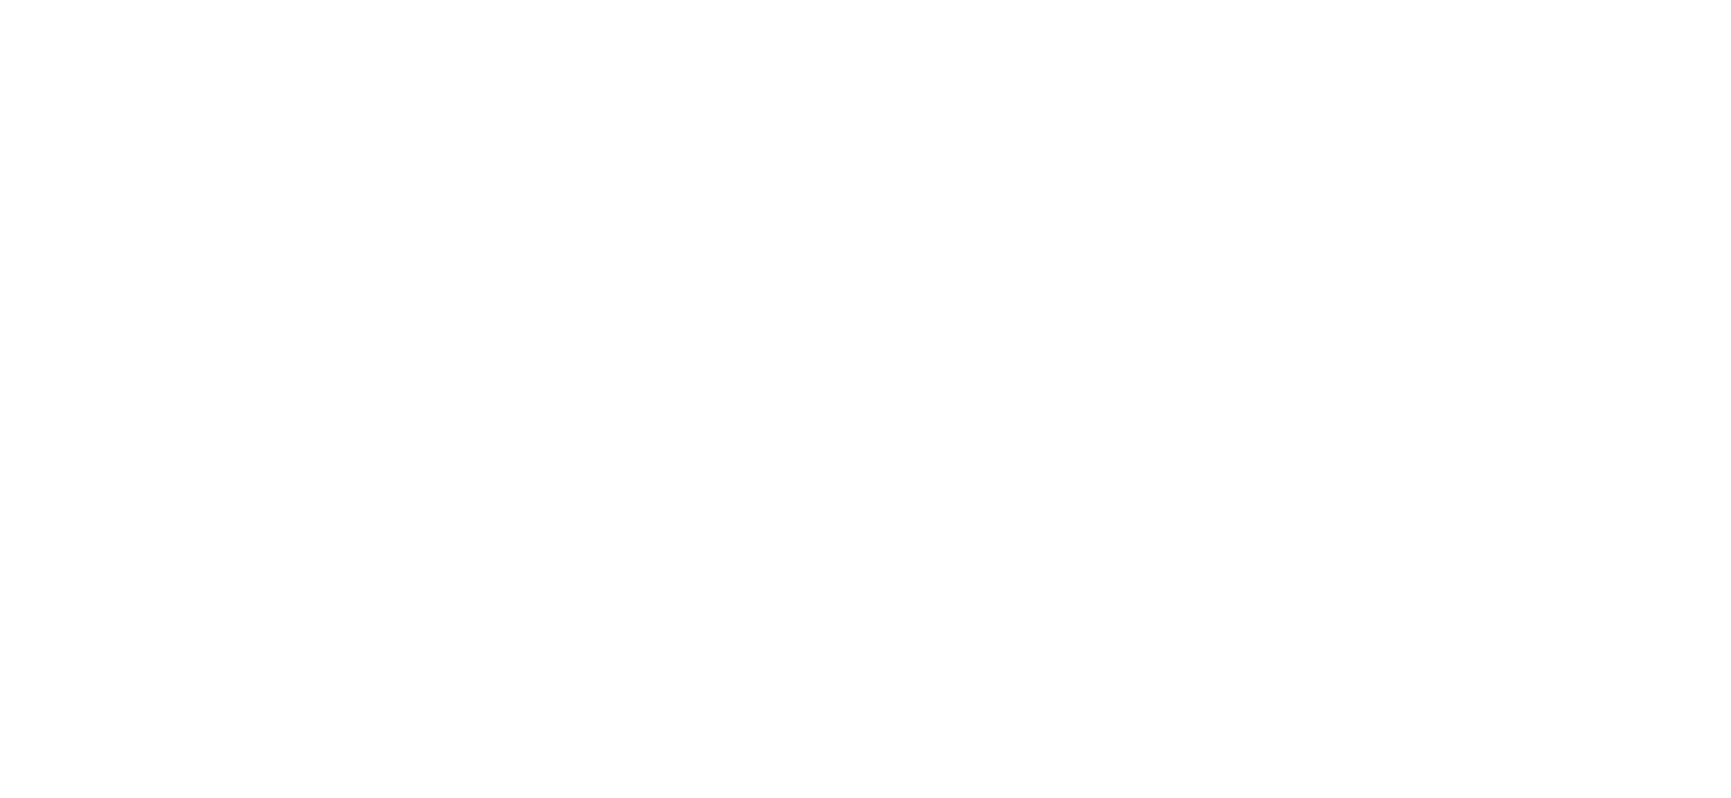 Newell Brands